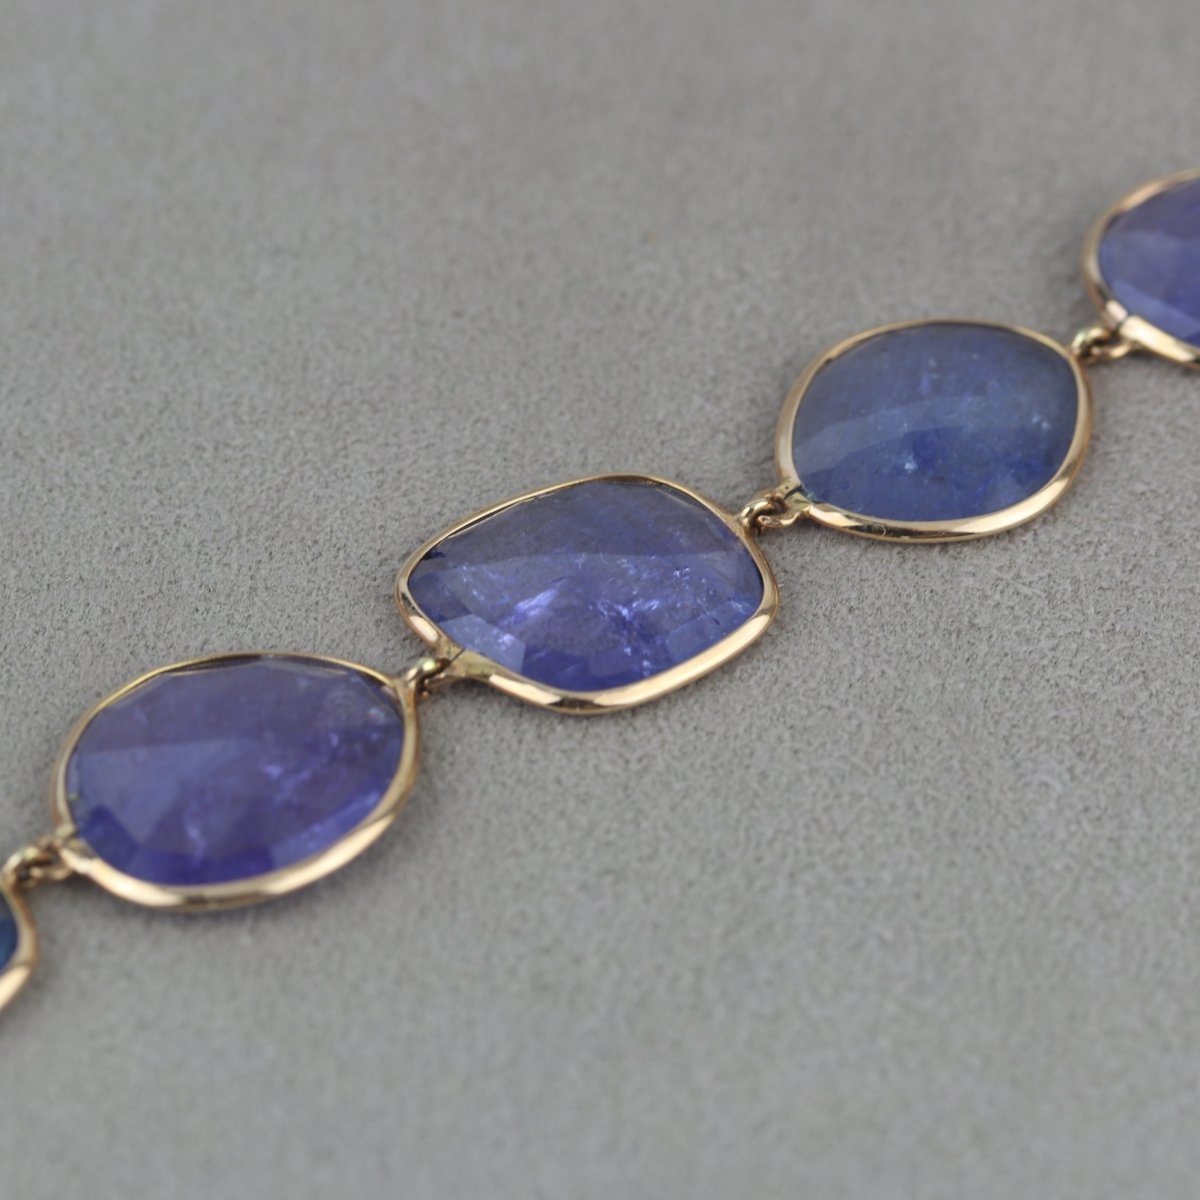 Bracelet with blue tanzanite discs - V. Gasser 1873